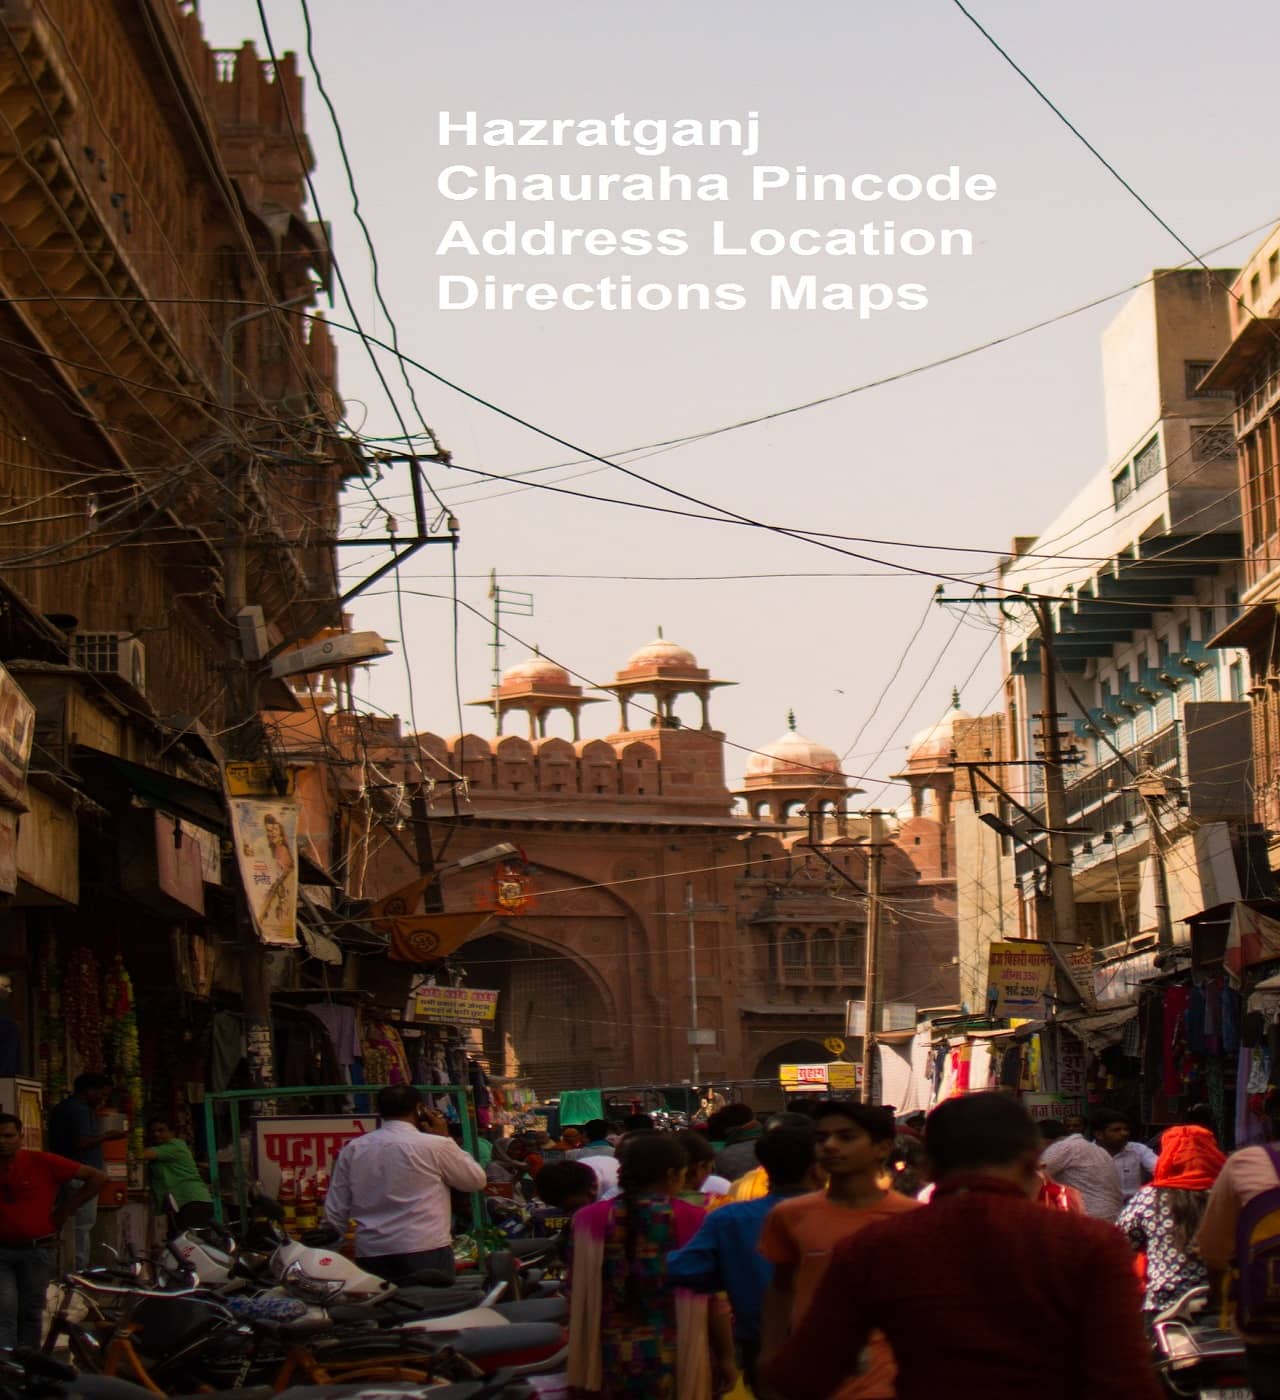 Hazratganj Chauraha Pincode Address Location Directions Maps